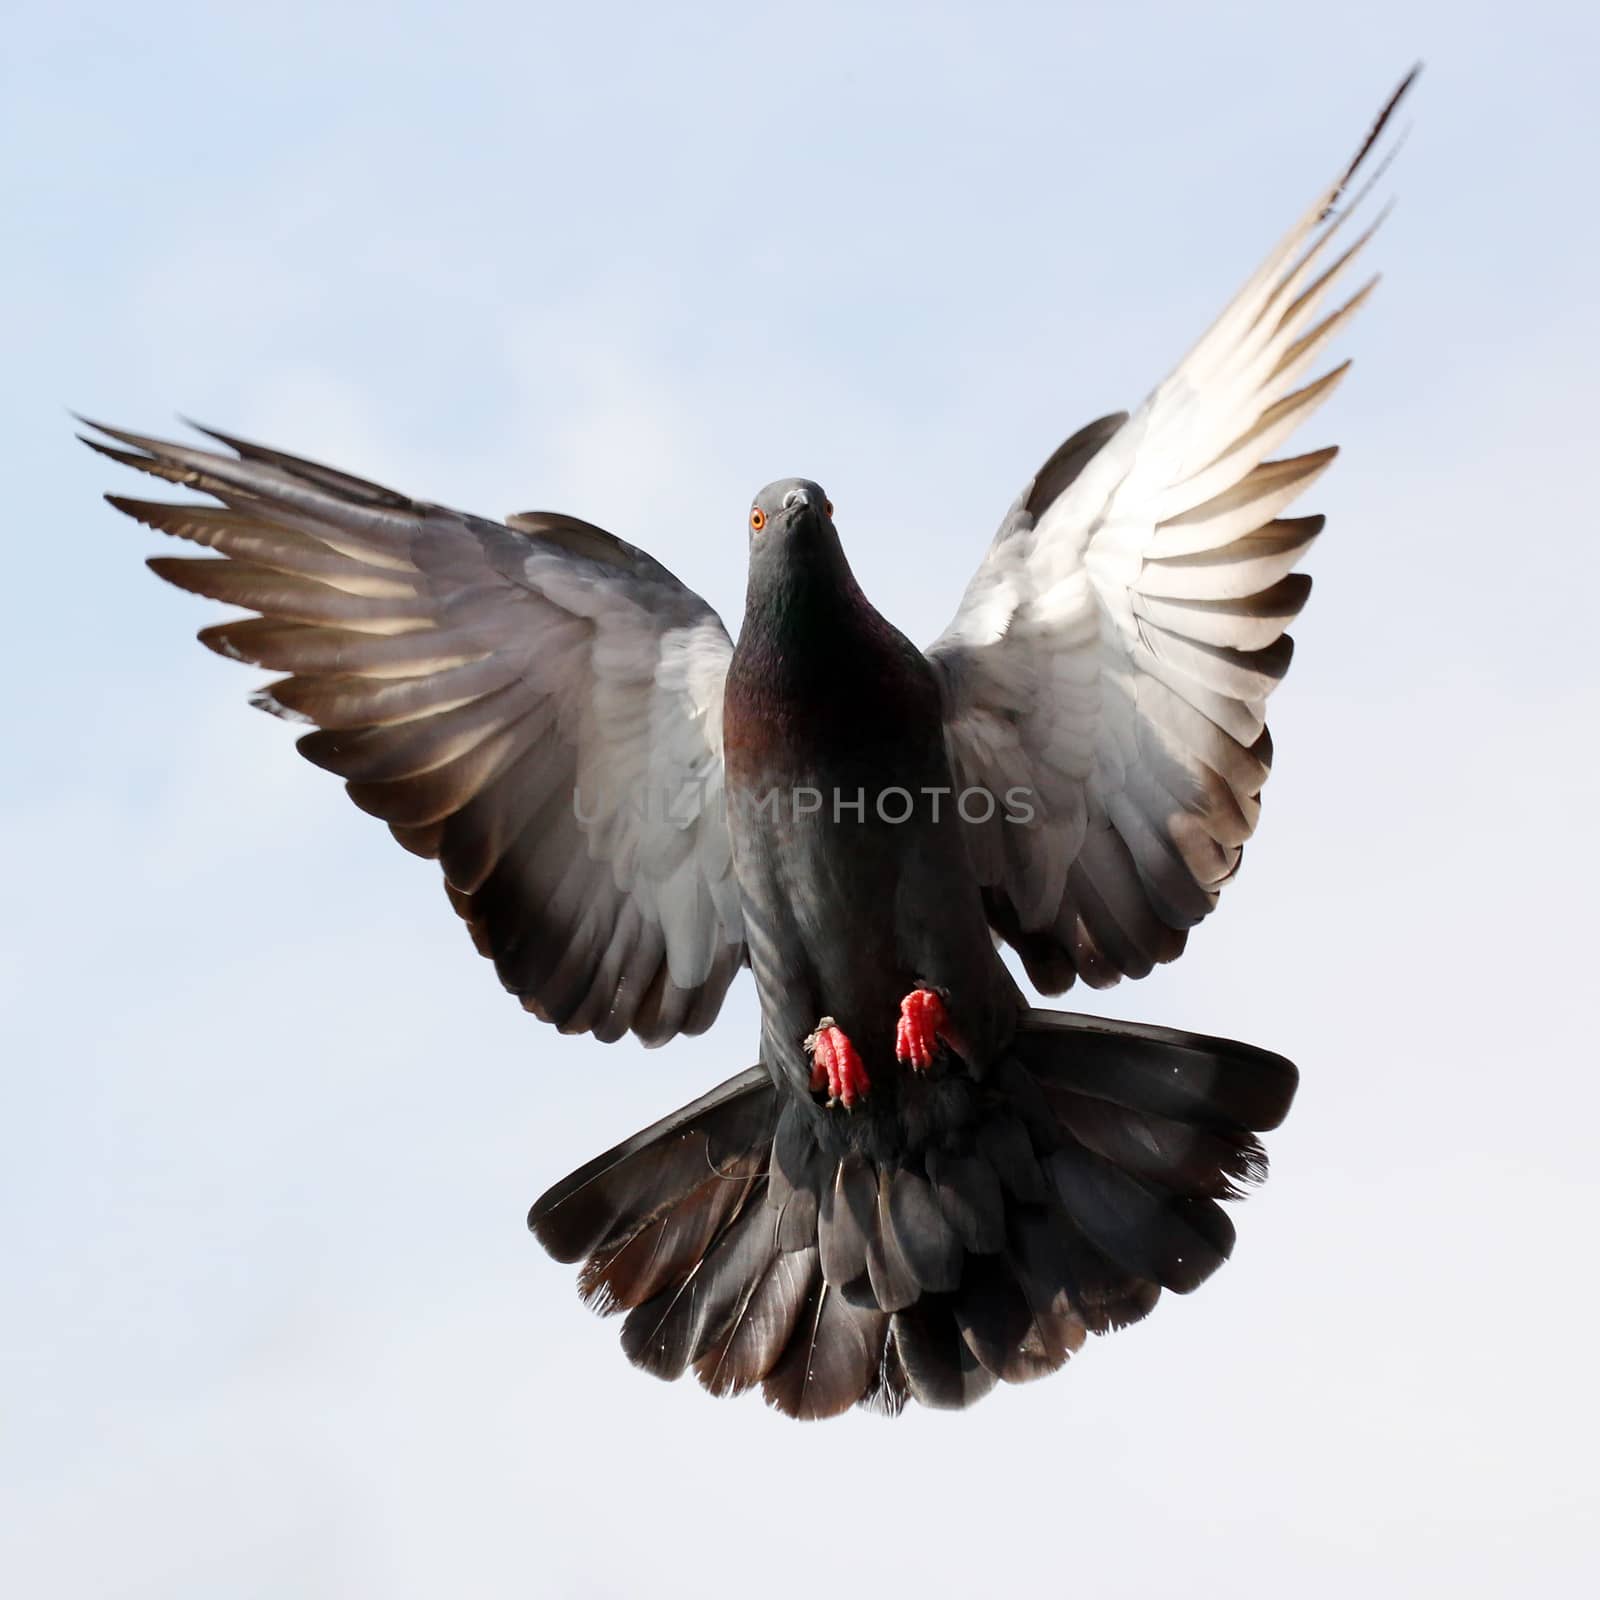 Flying pigeon against beautiful sky by leisuretime70